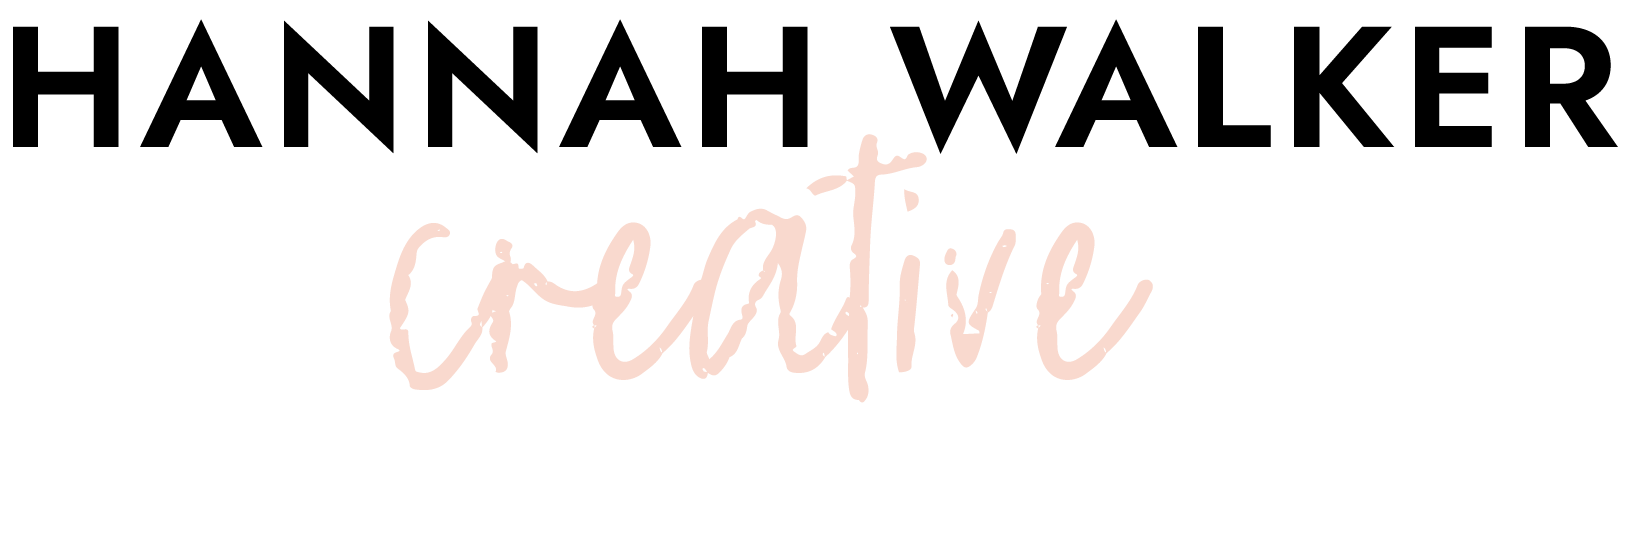 Hannah Walker Creative Logo